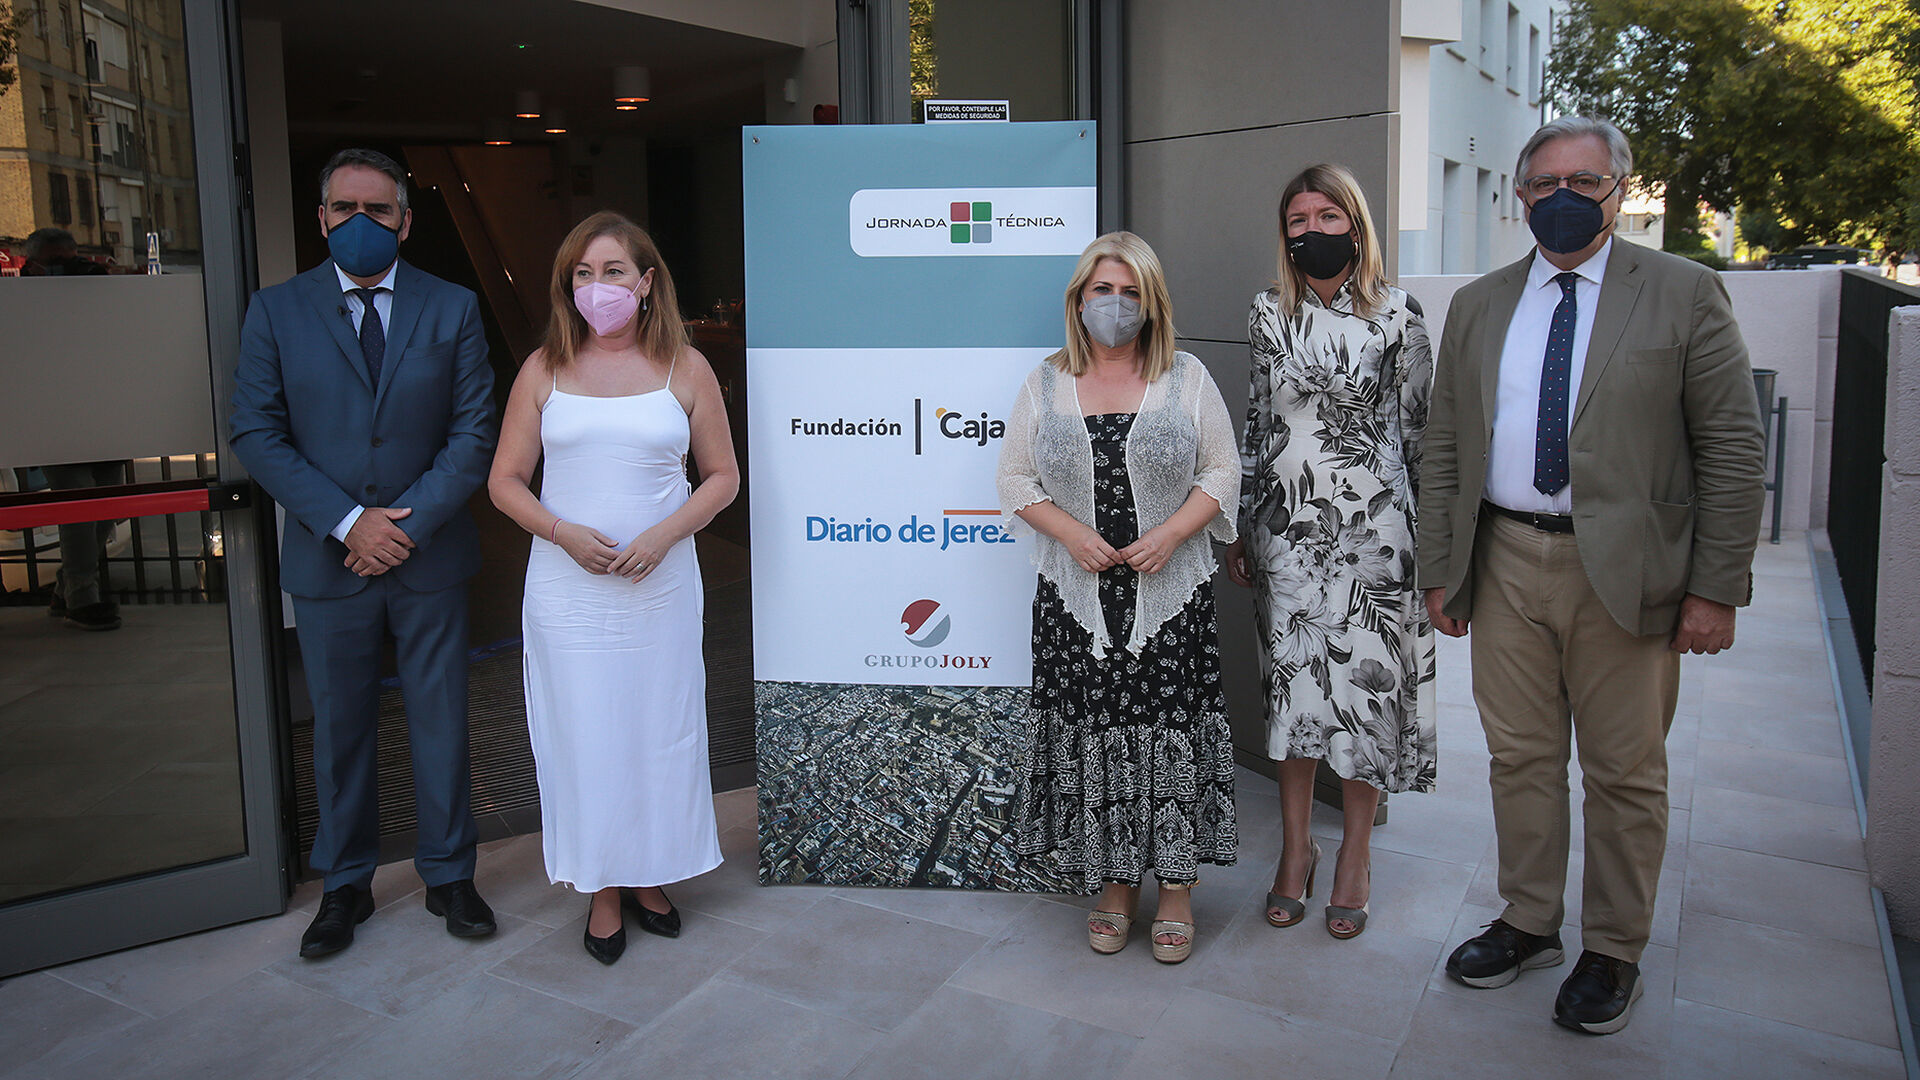 Jornada T&eacute;cnica del Grupo Joly celebrada en el Auditorio Cajasol de Jerez